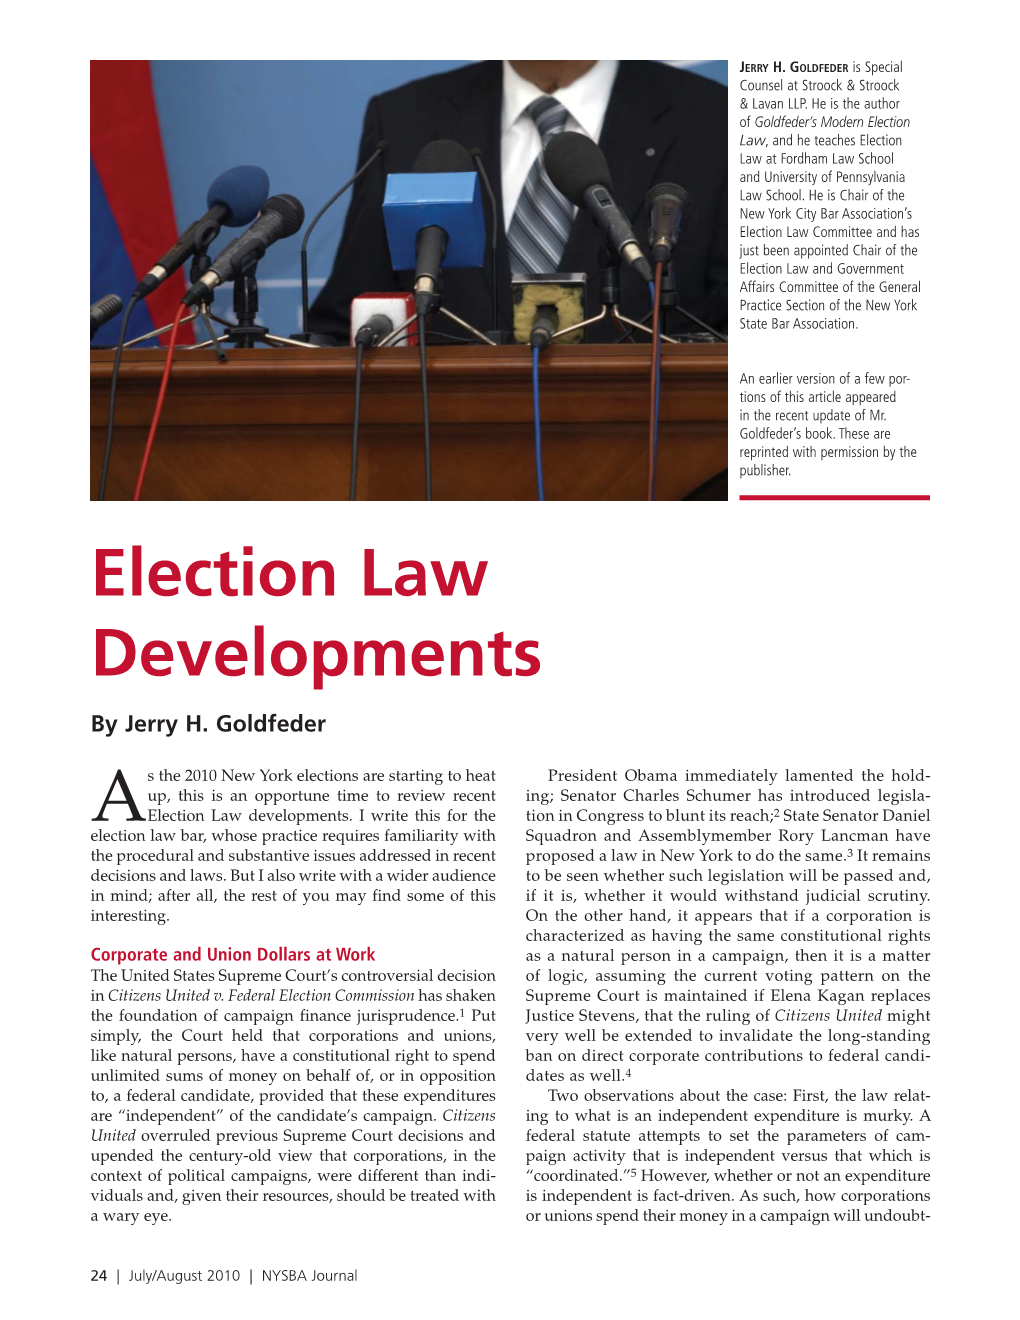 Election Law Developments